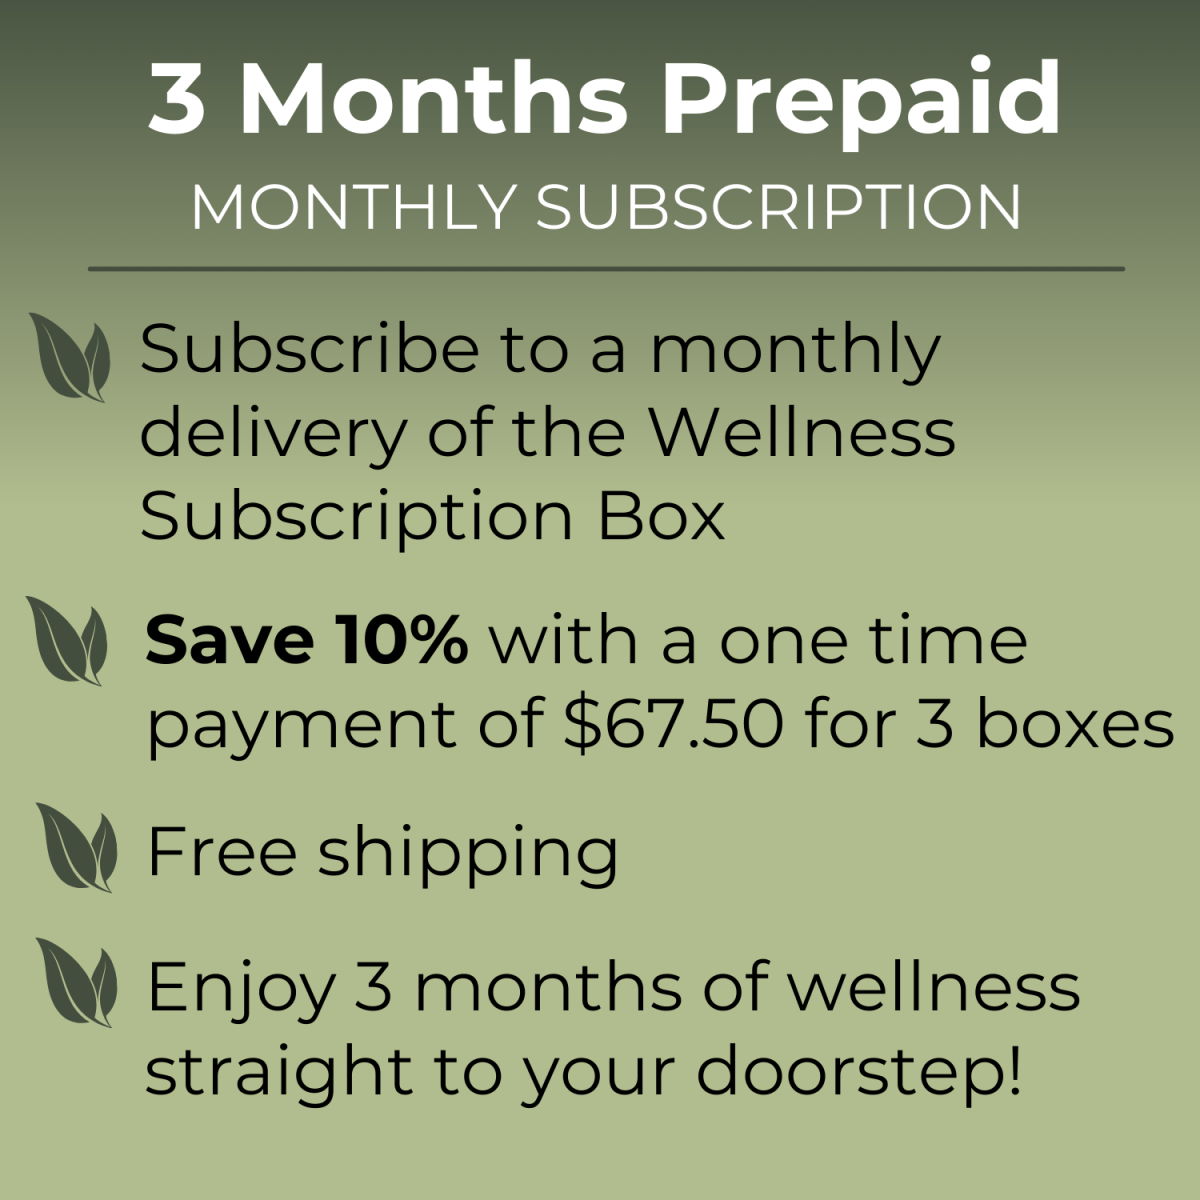 Wellness Tea Subscription Box - Subscription Box - Full Leaf Tea Company